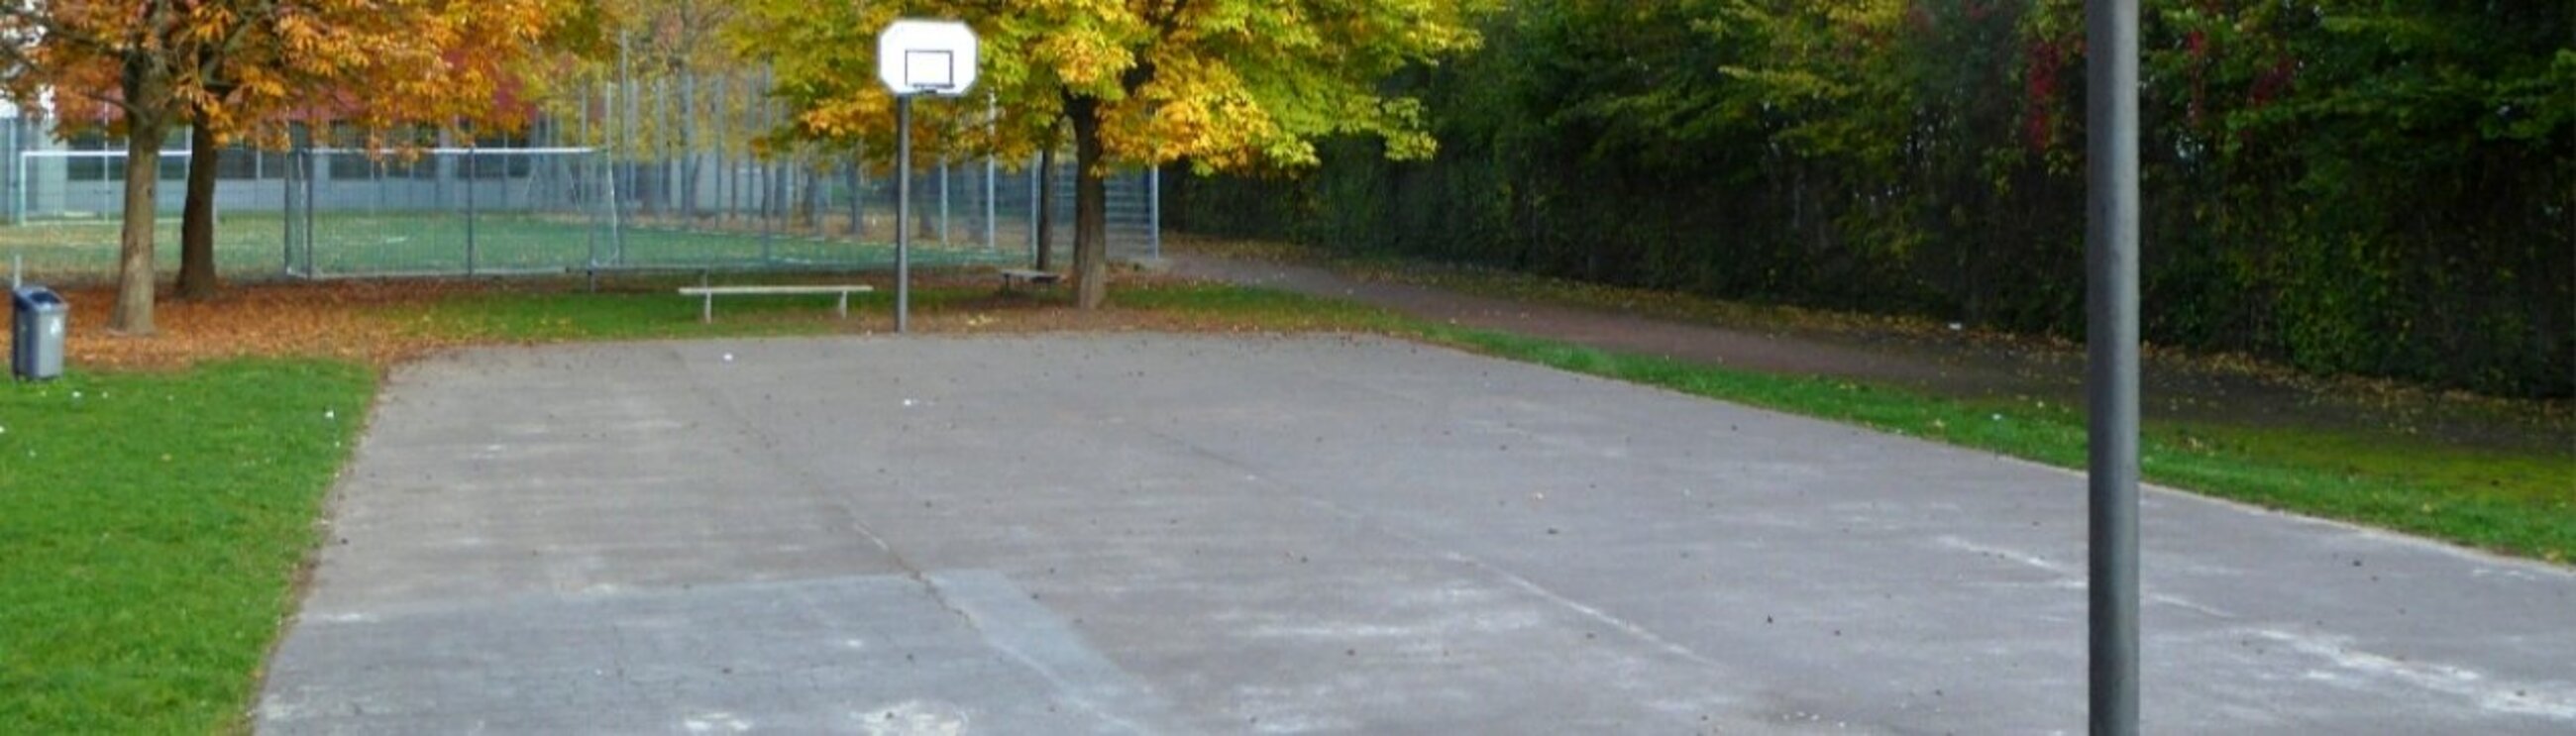 201022_Basketballplatzneu